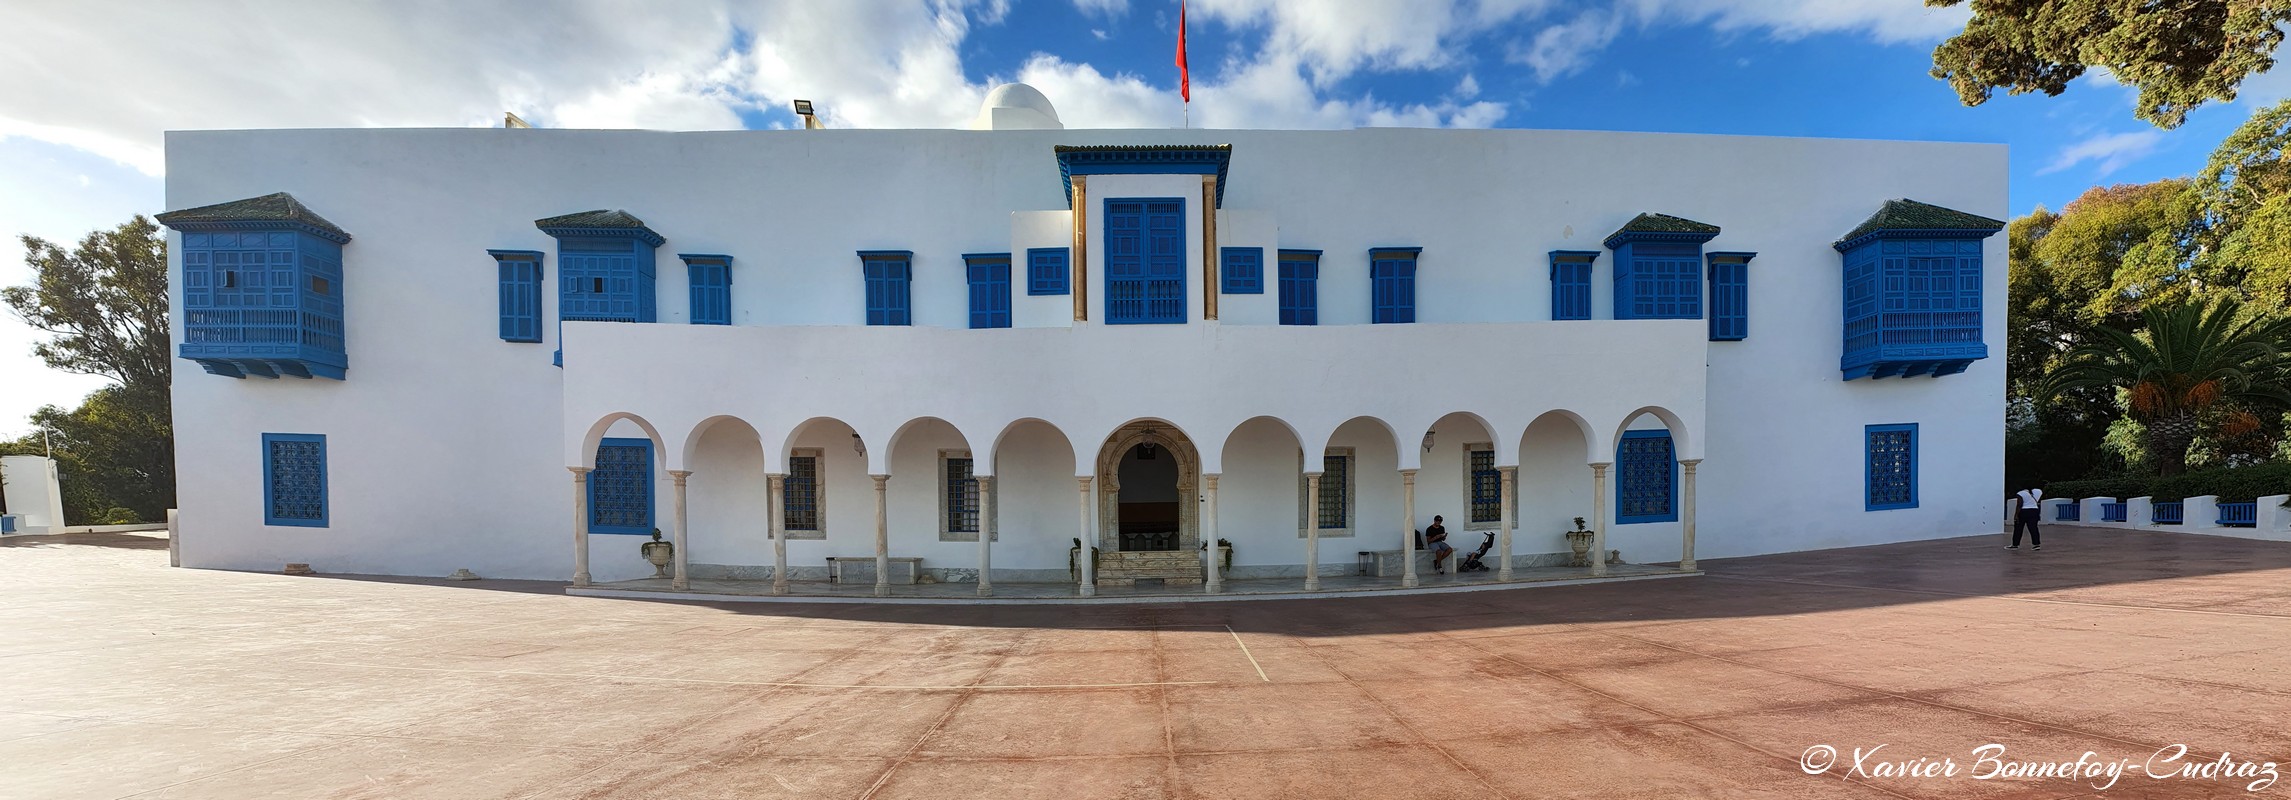 Sidi Bou Saïd - Ennejma Ezzahra Palace
Mots-clés: TUN Tunisie Sidi Bou Saïd Tunis Carthage Ennejma Ezzahra Palace